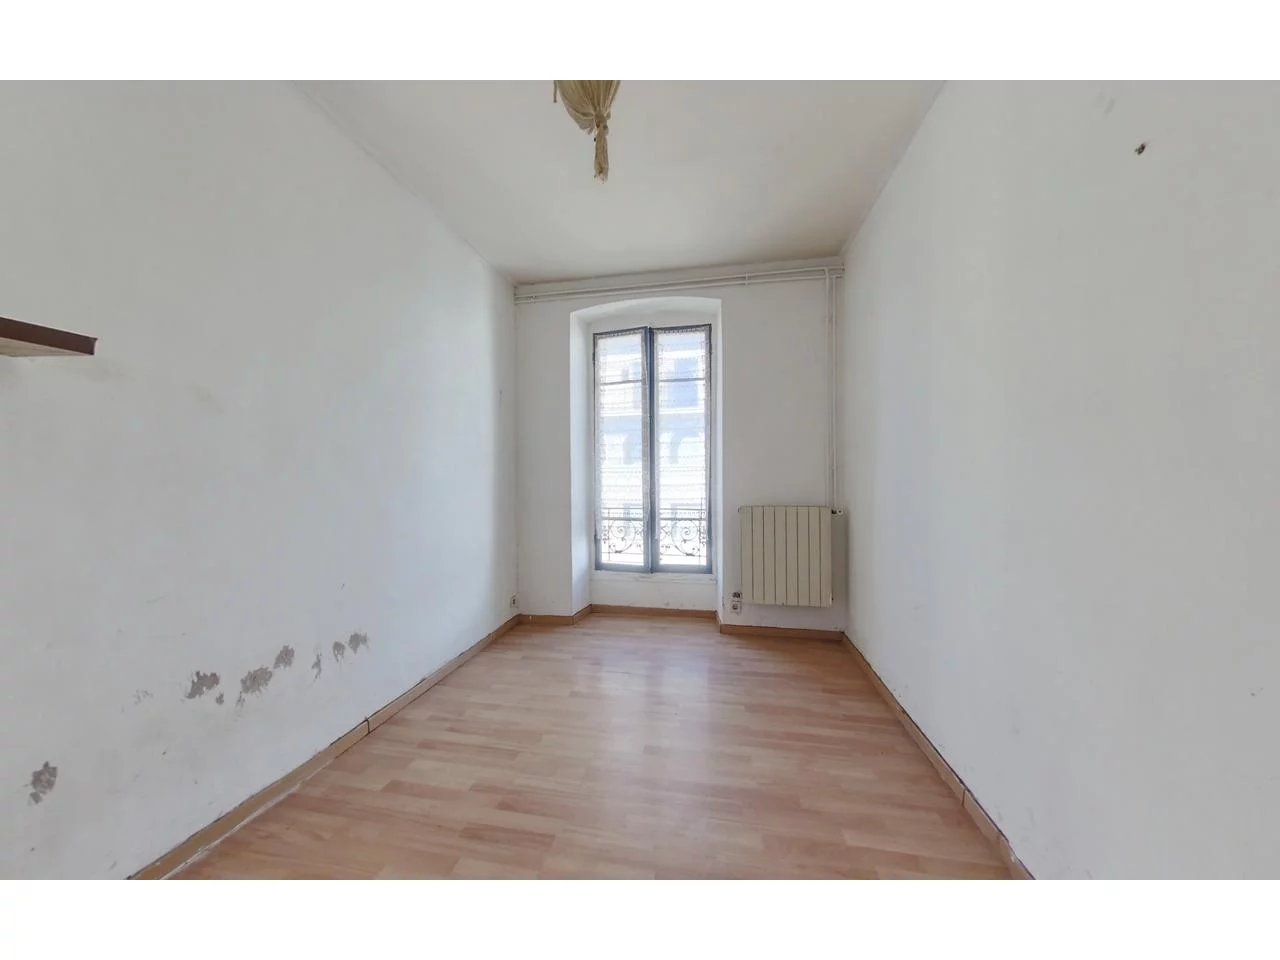 Appartement  3 Locali 54m2  In vendita   227 000 €